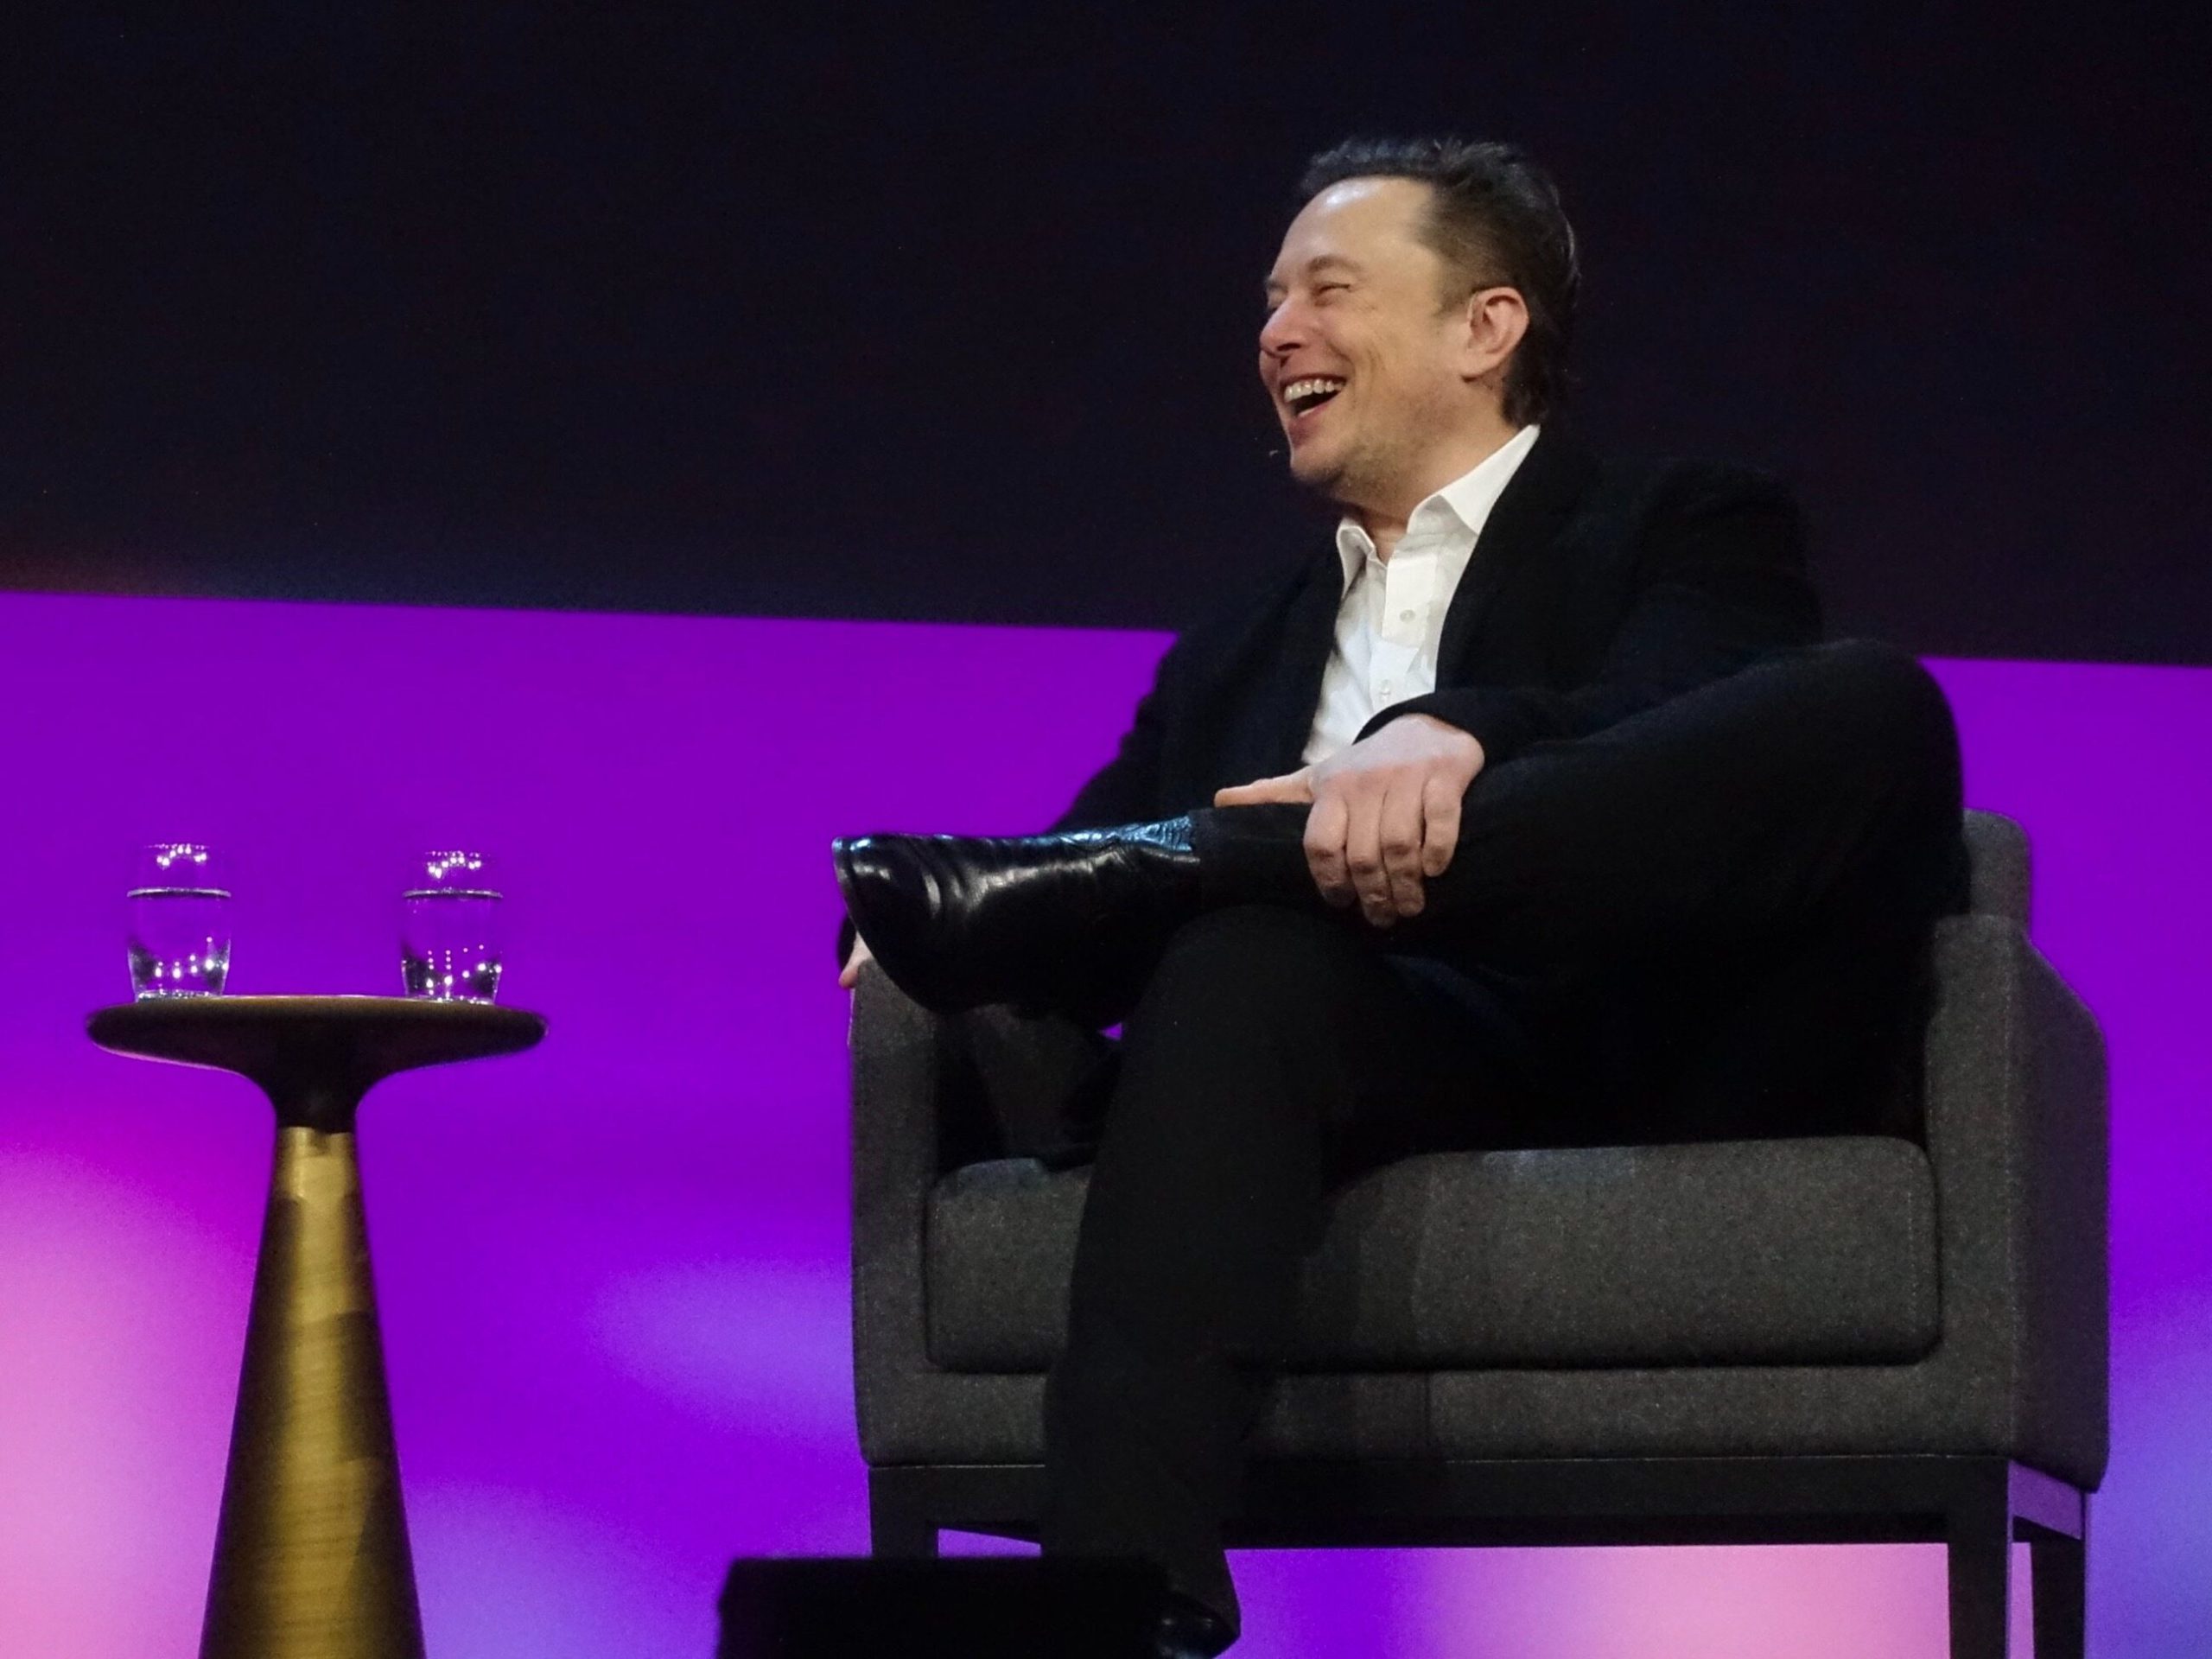 Perversity or pure business?  Elon Musk's grok raises concerns